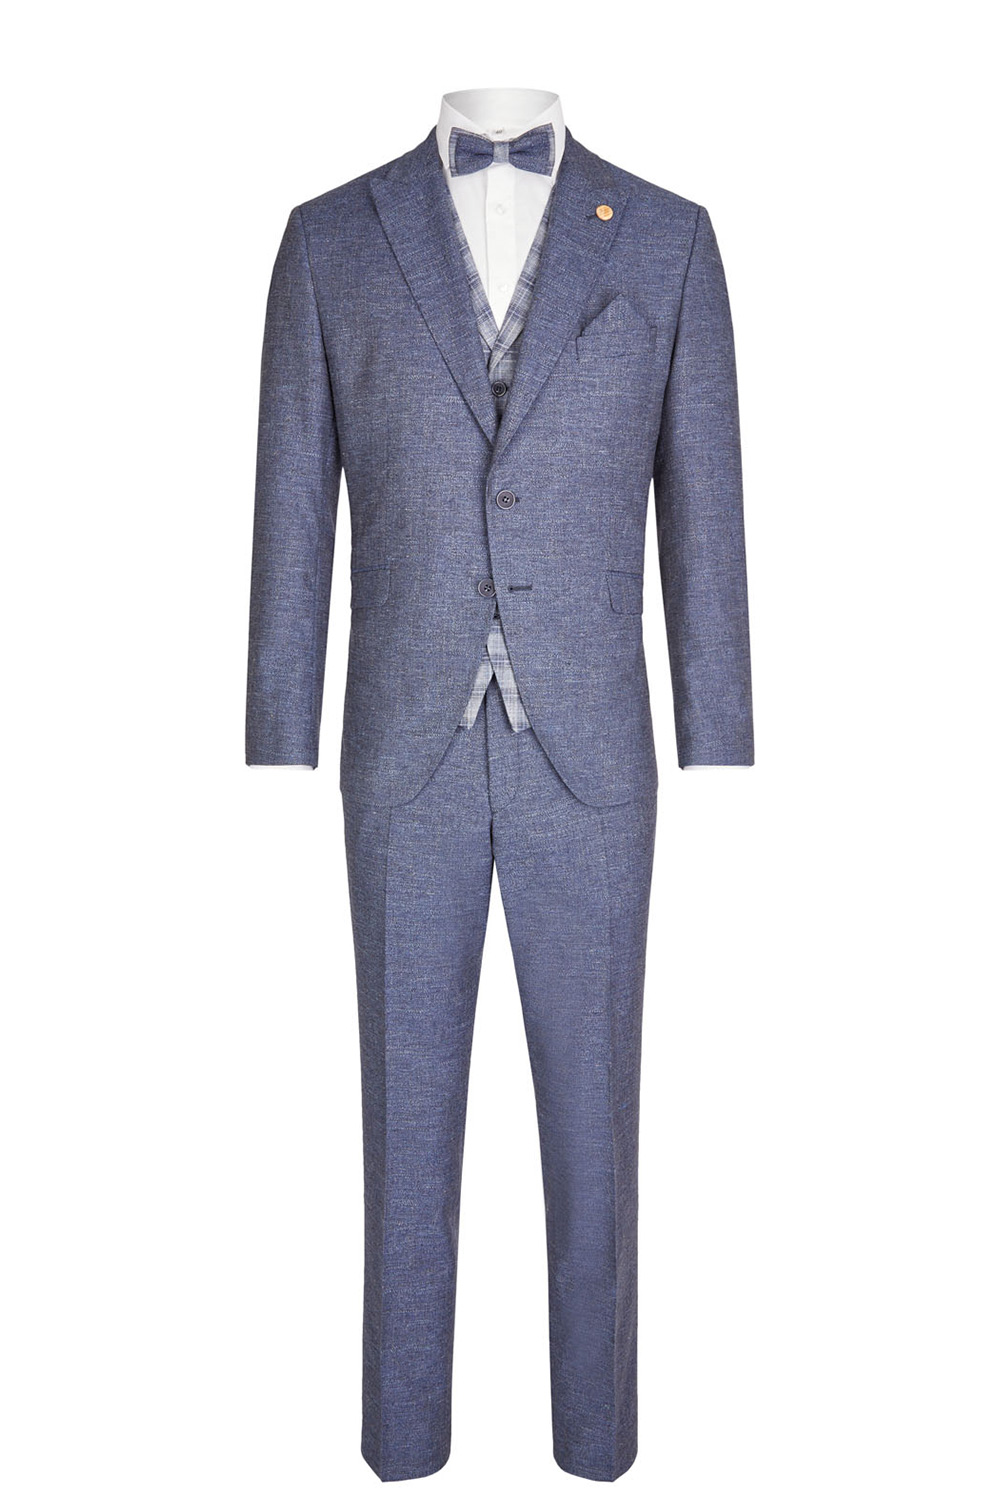 Dark Blue 3 piece Wedding Suit - Tom Murphy's Formal and Menswear